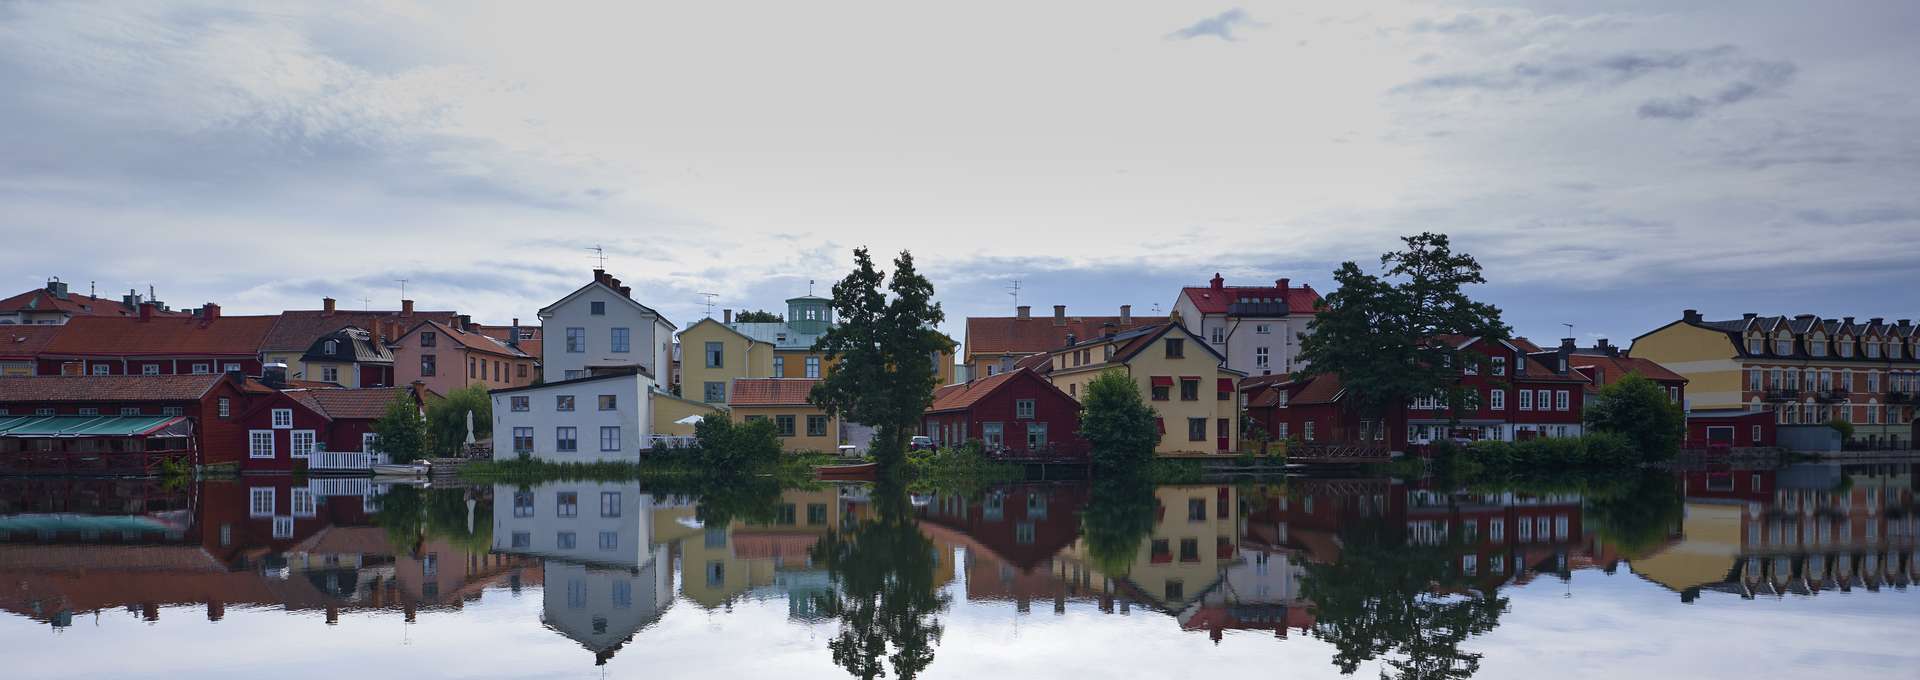 Gamla staden, Eskilstuna